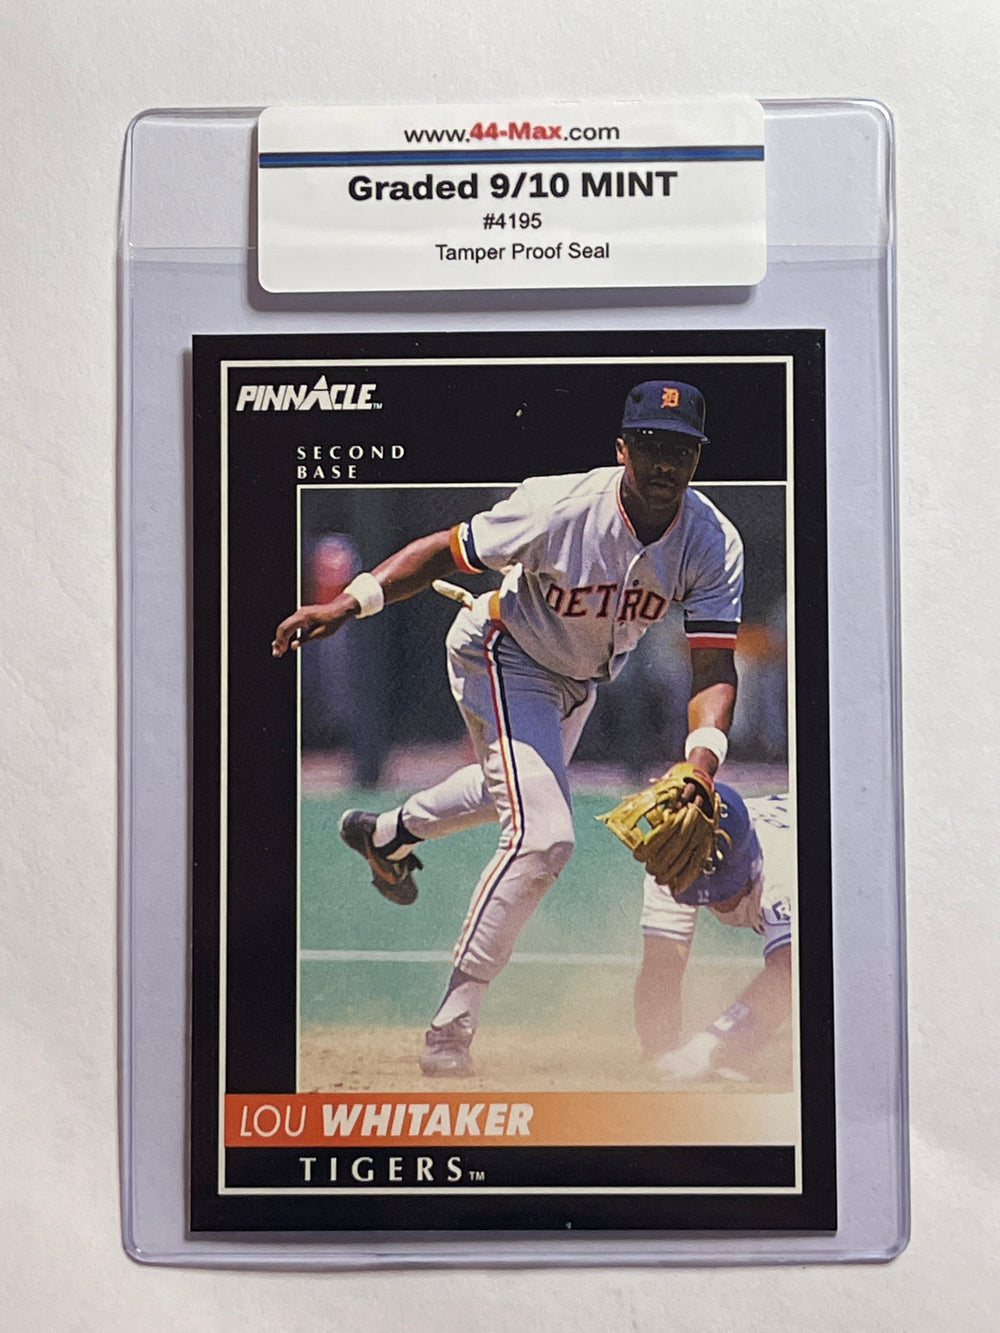 Lou Whitaker 1992 Pinnacle Baseball Card. 44-Max 9/10 Mint #4195